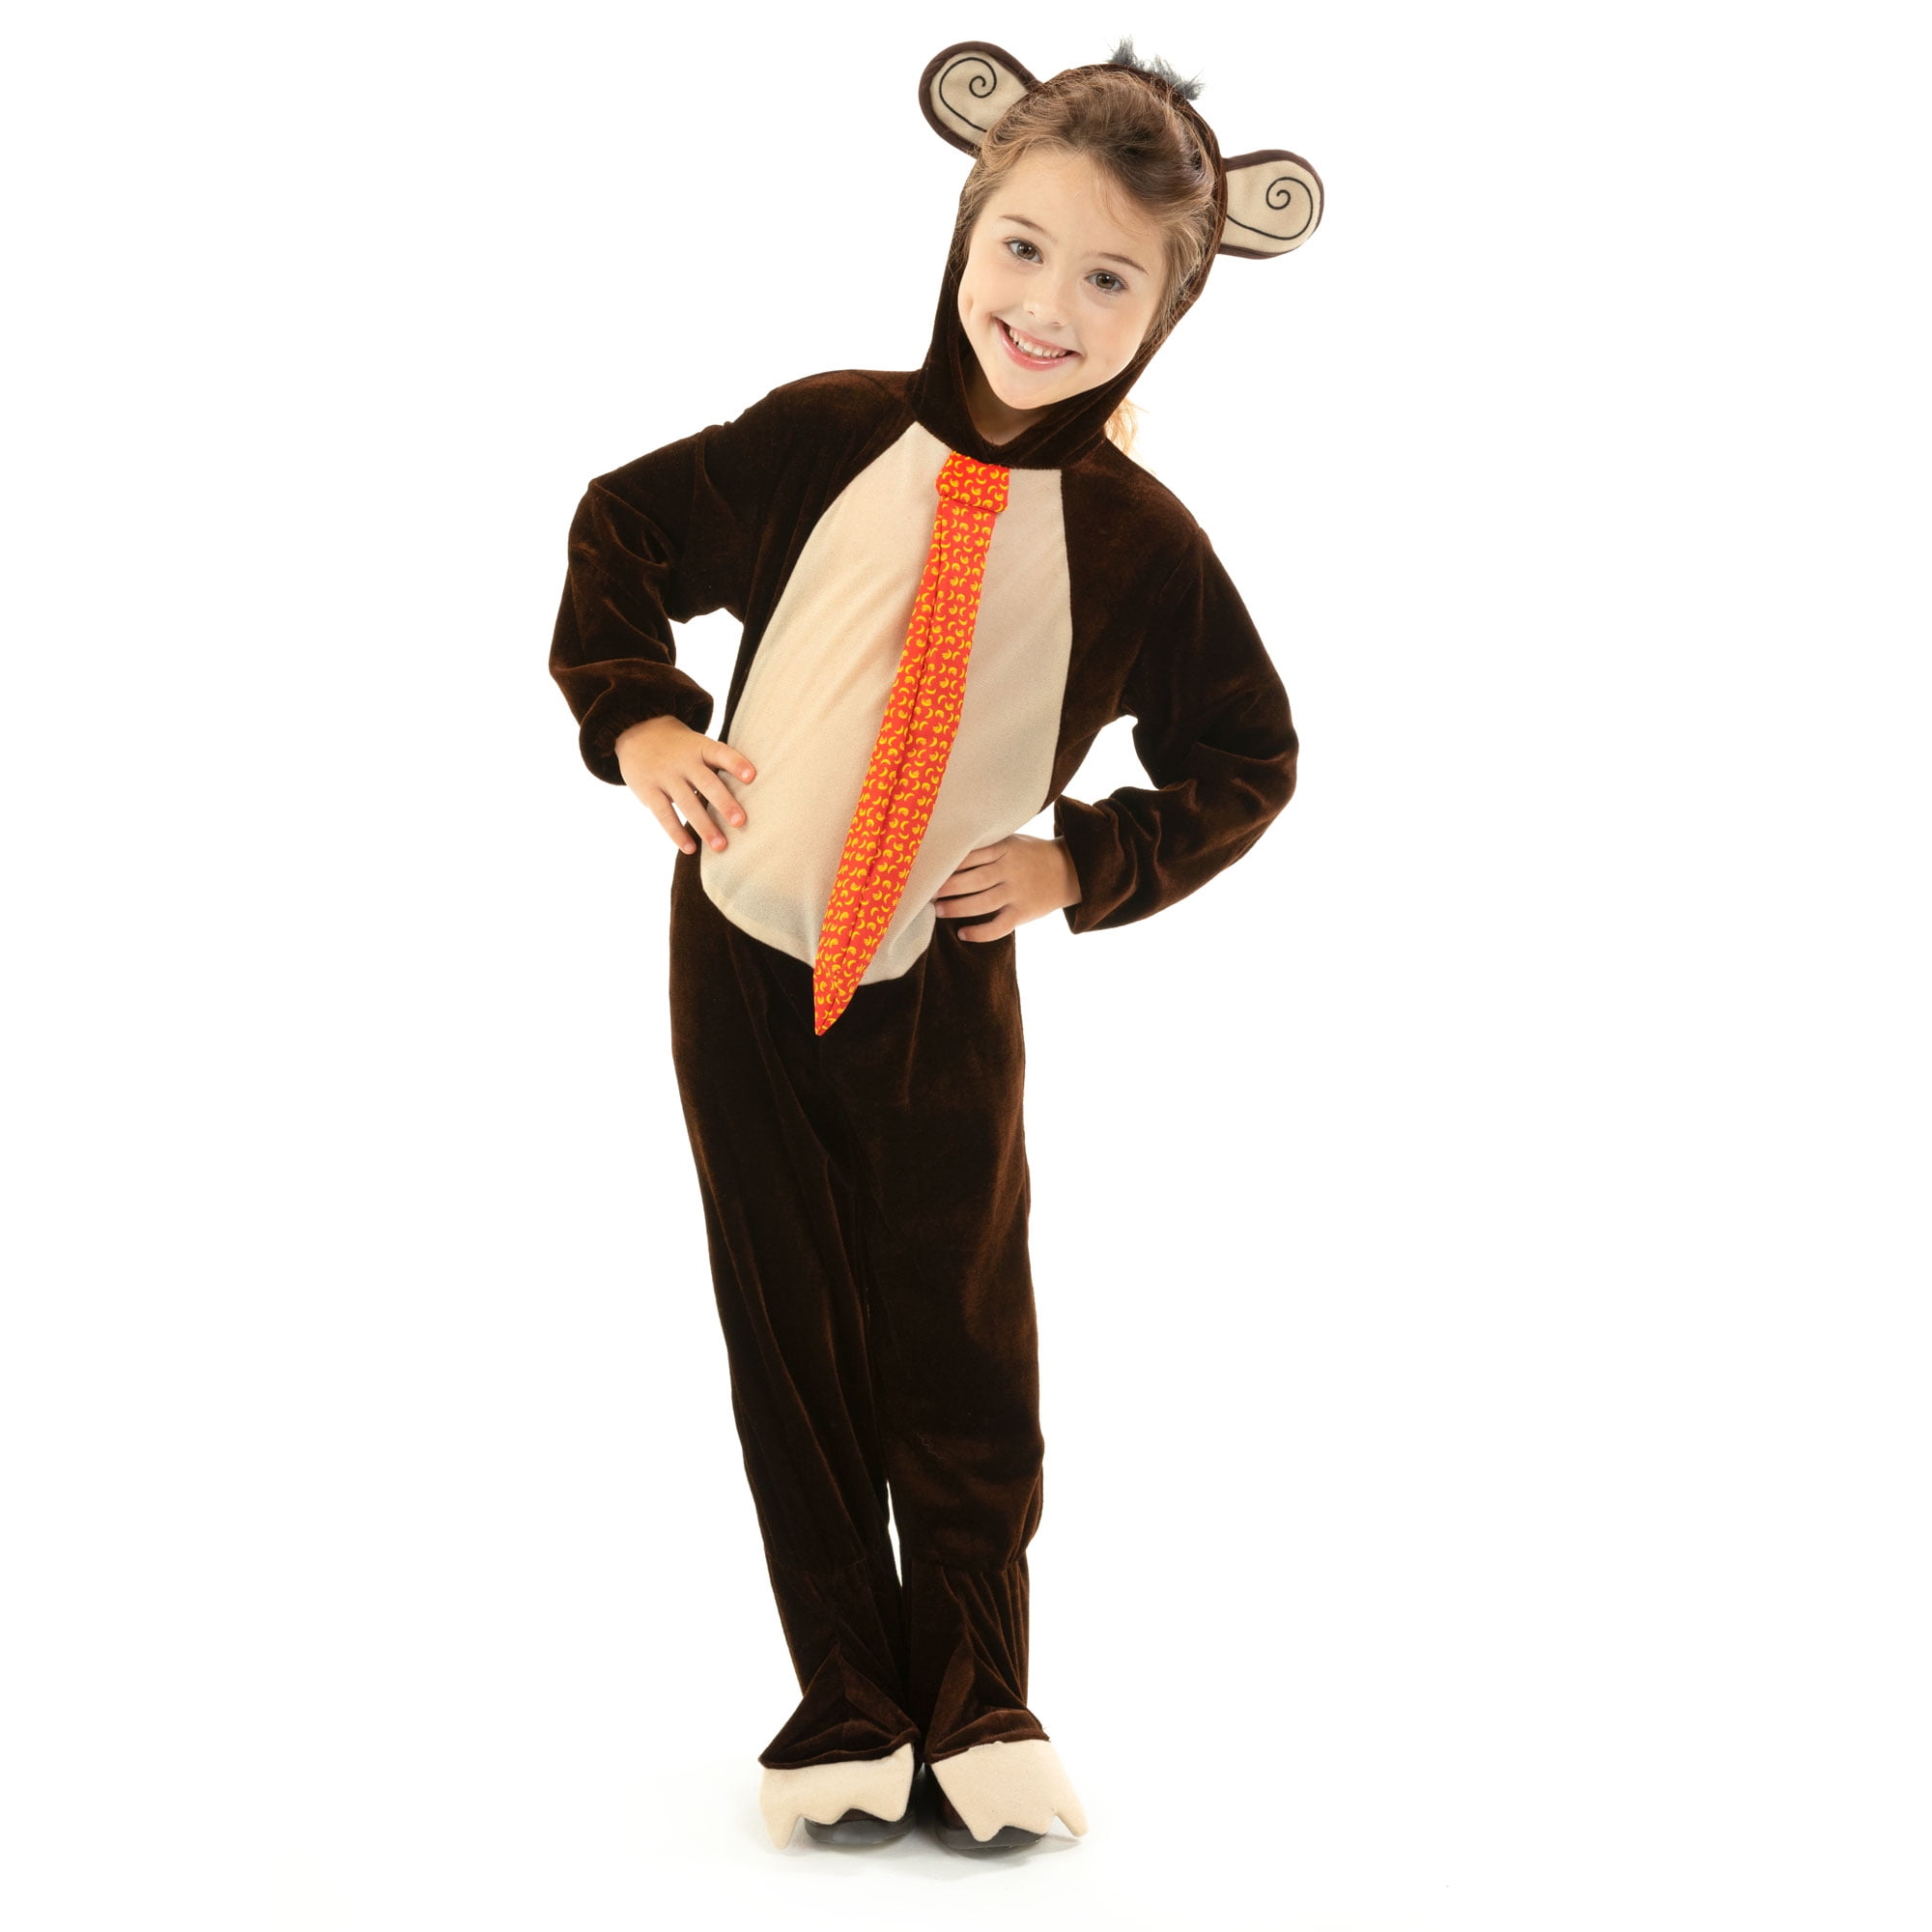 Adult Funny Teddy Bear Big Head Mascot Costume Fancy Dress Animal Zoo Jungle New